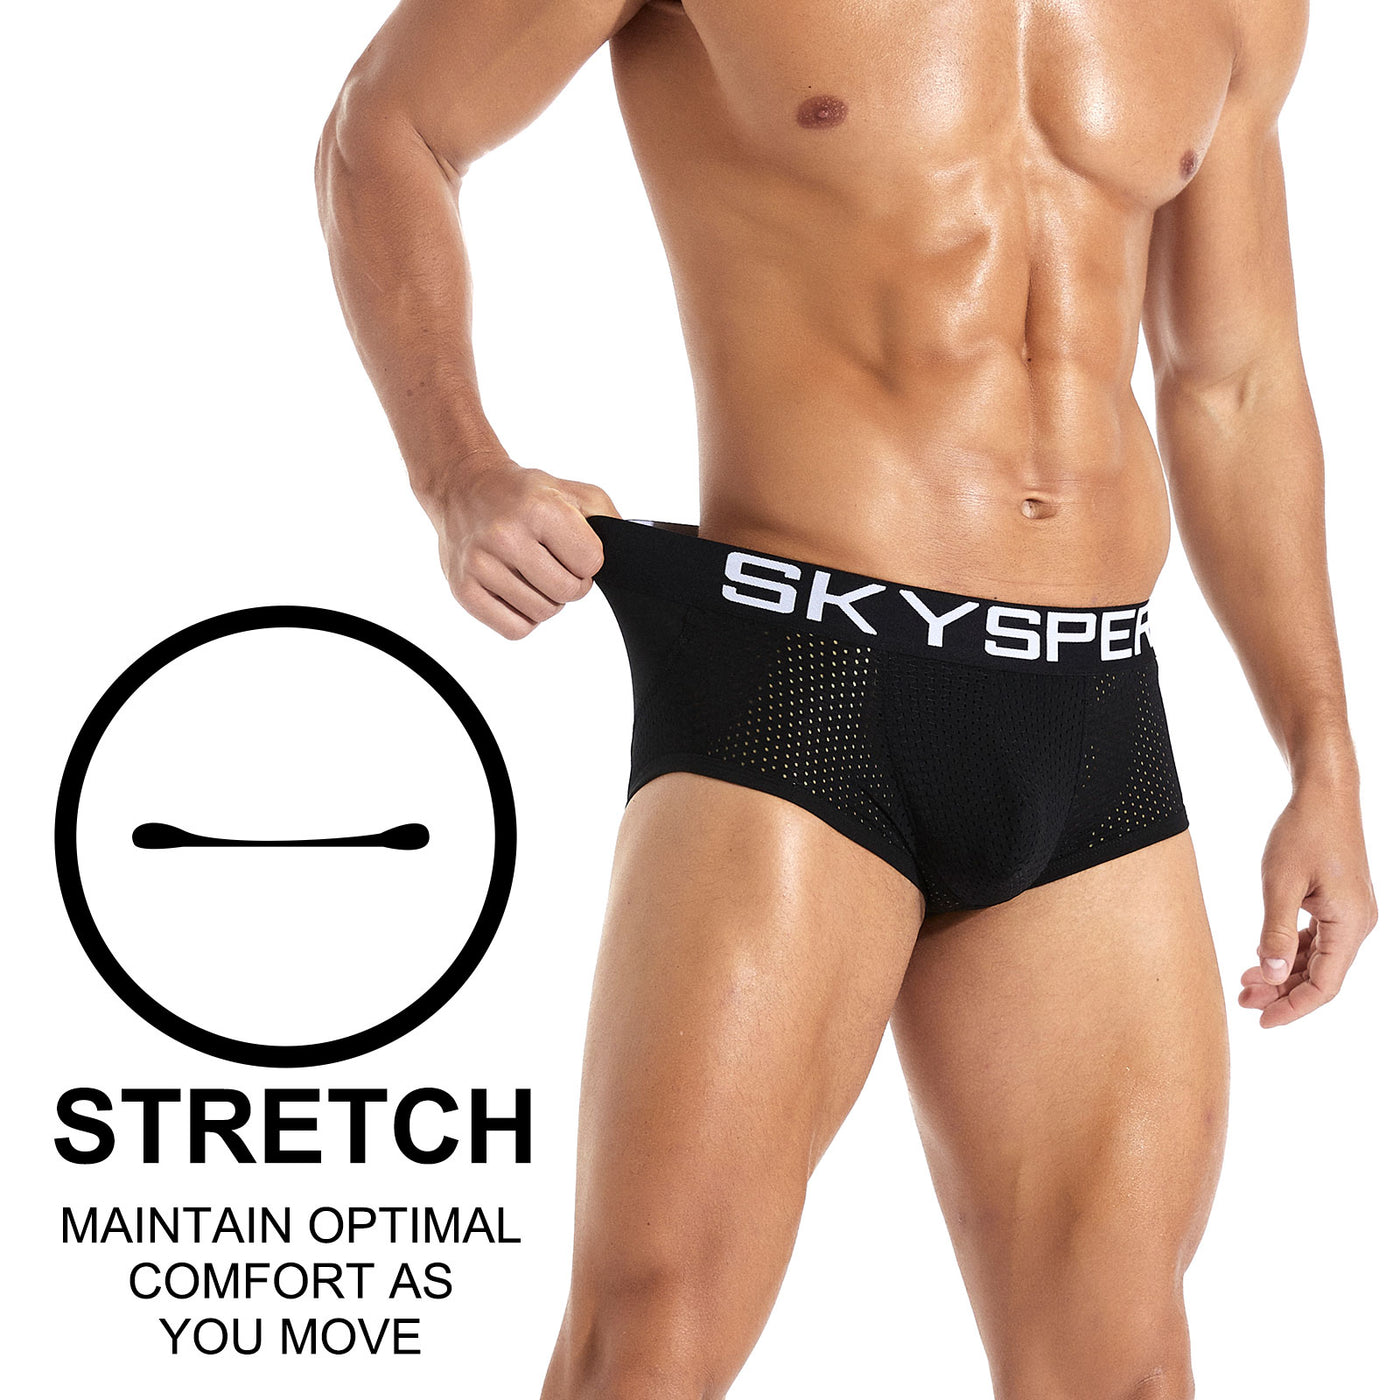 SG19 - SKYSPER Men's Jockstrap Cotton & Mesh Underwear Athletic Supporter